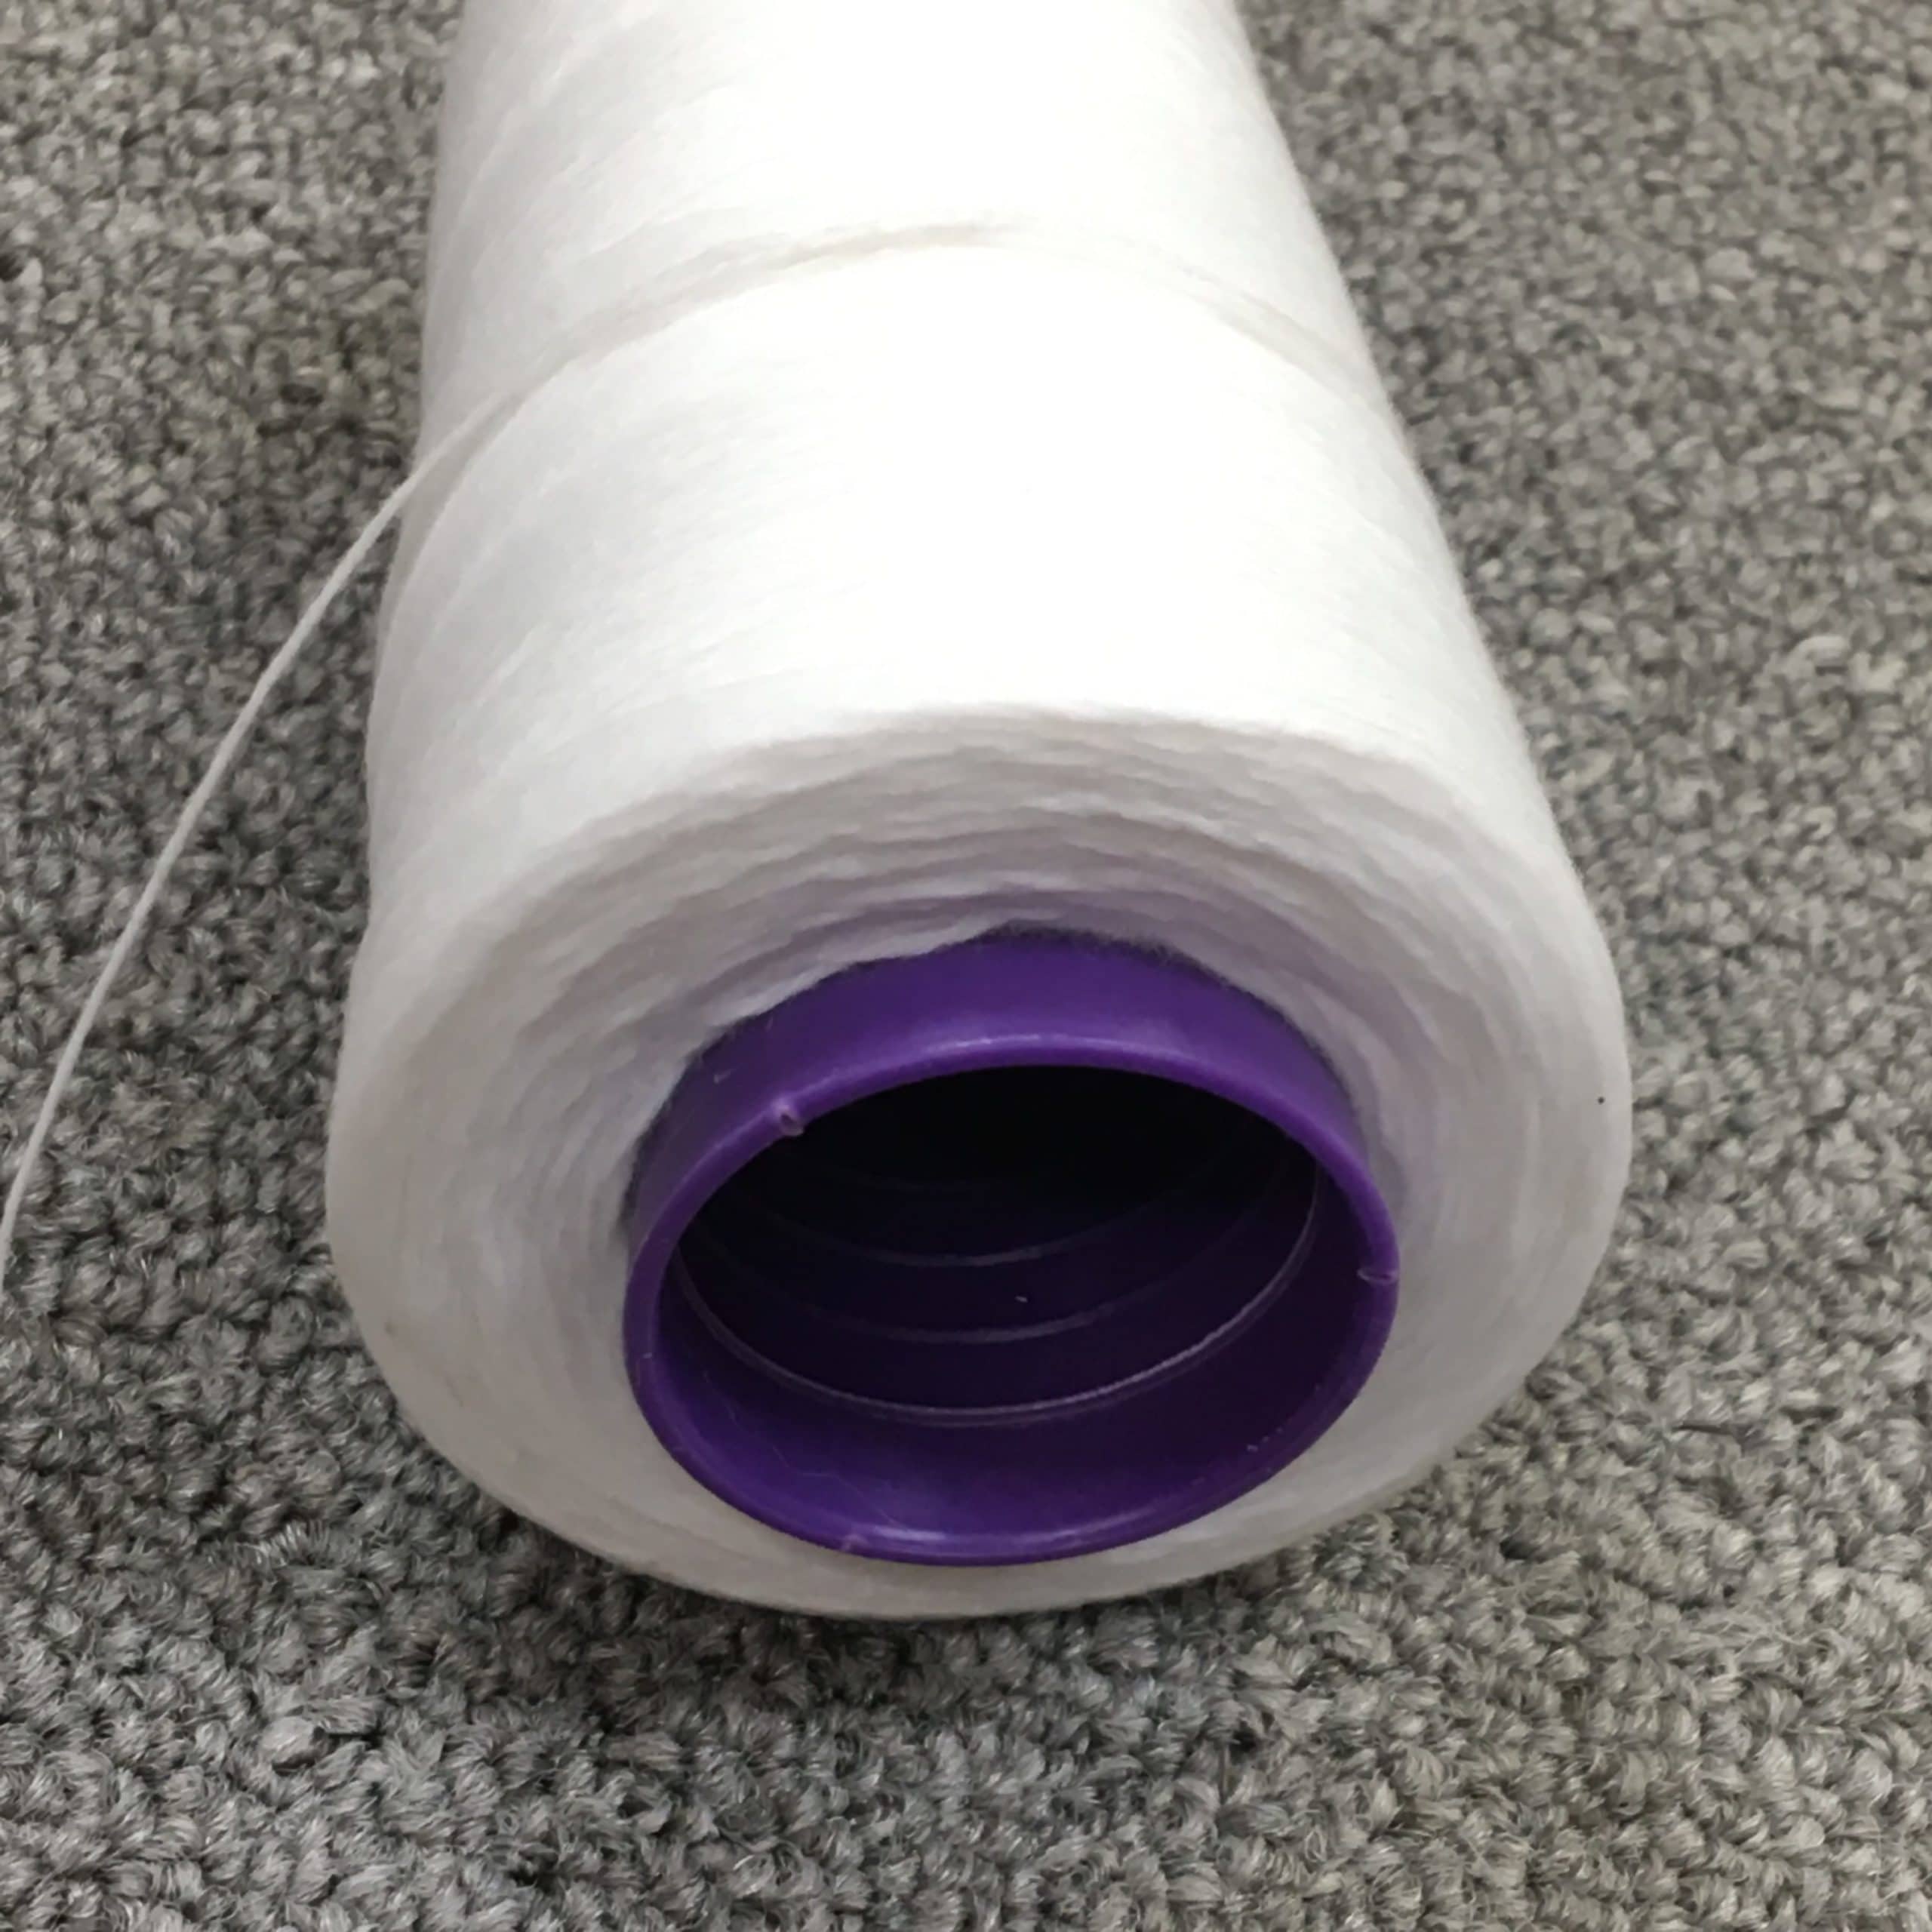 #08093 White 11/3 Poly Cotton Thread for Bag Closer